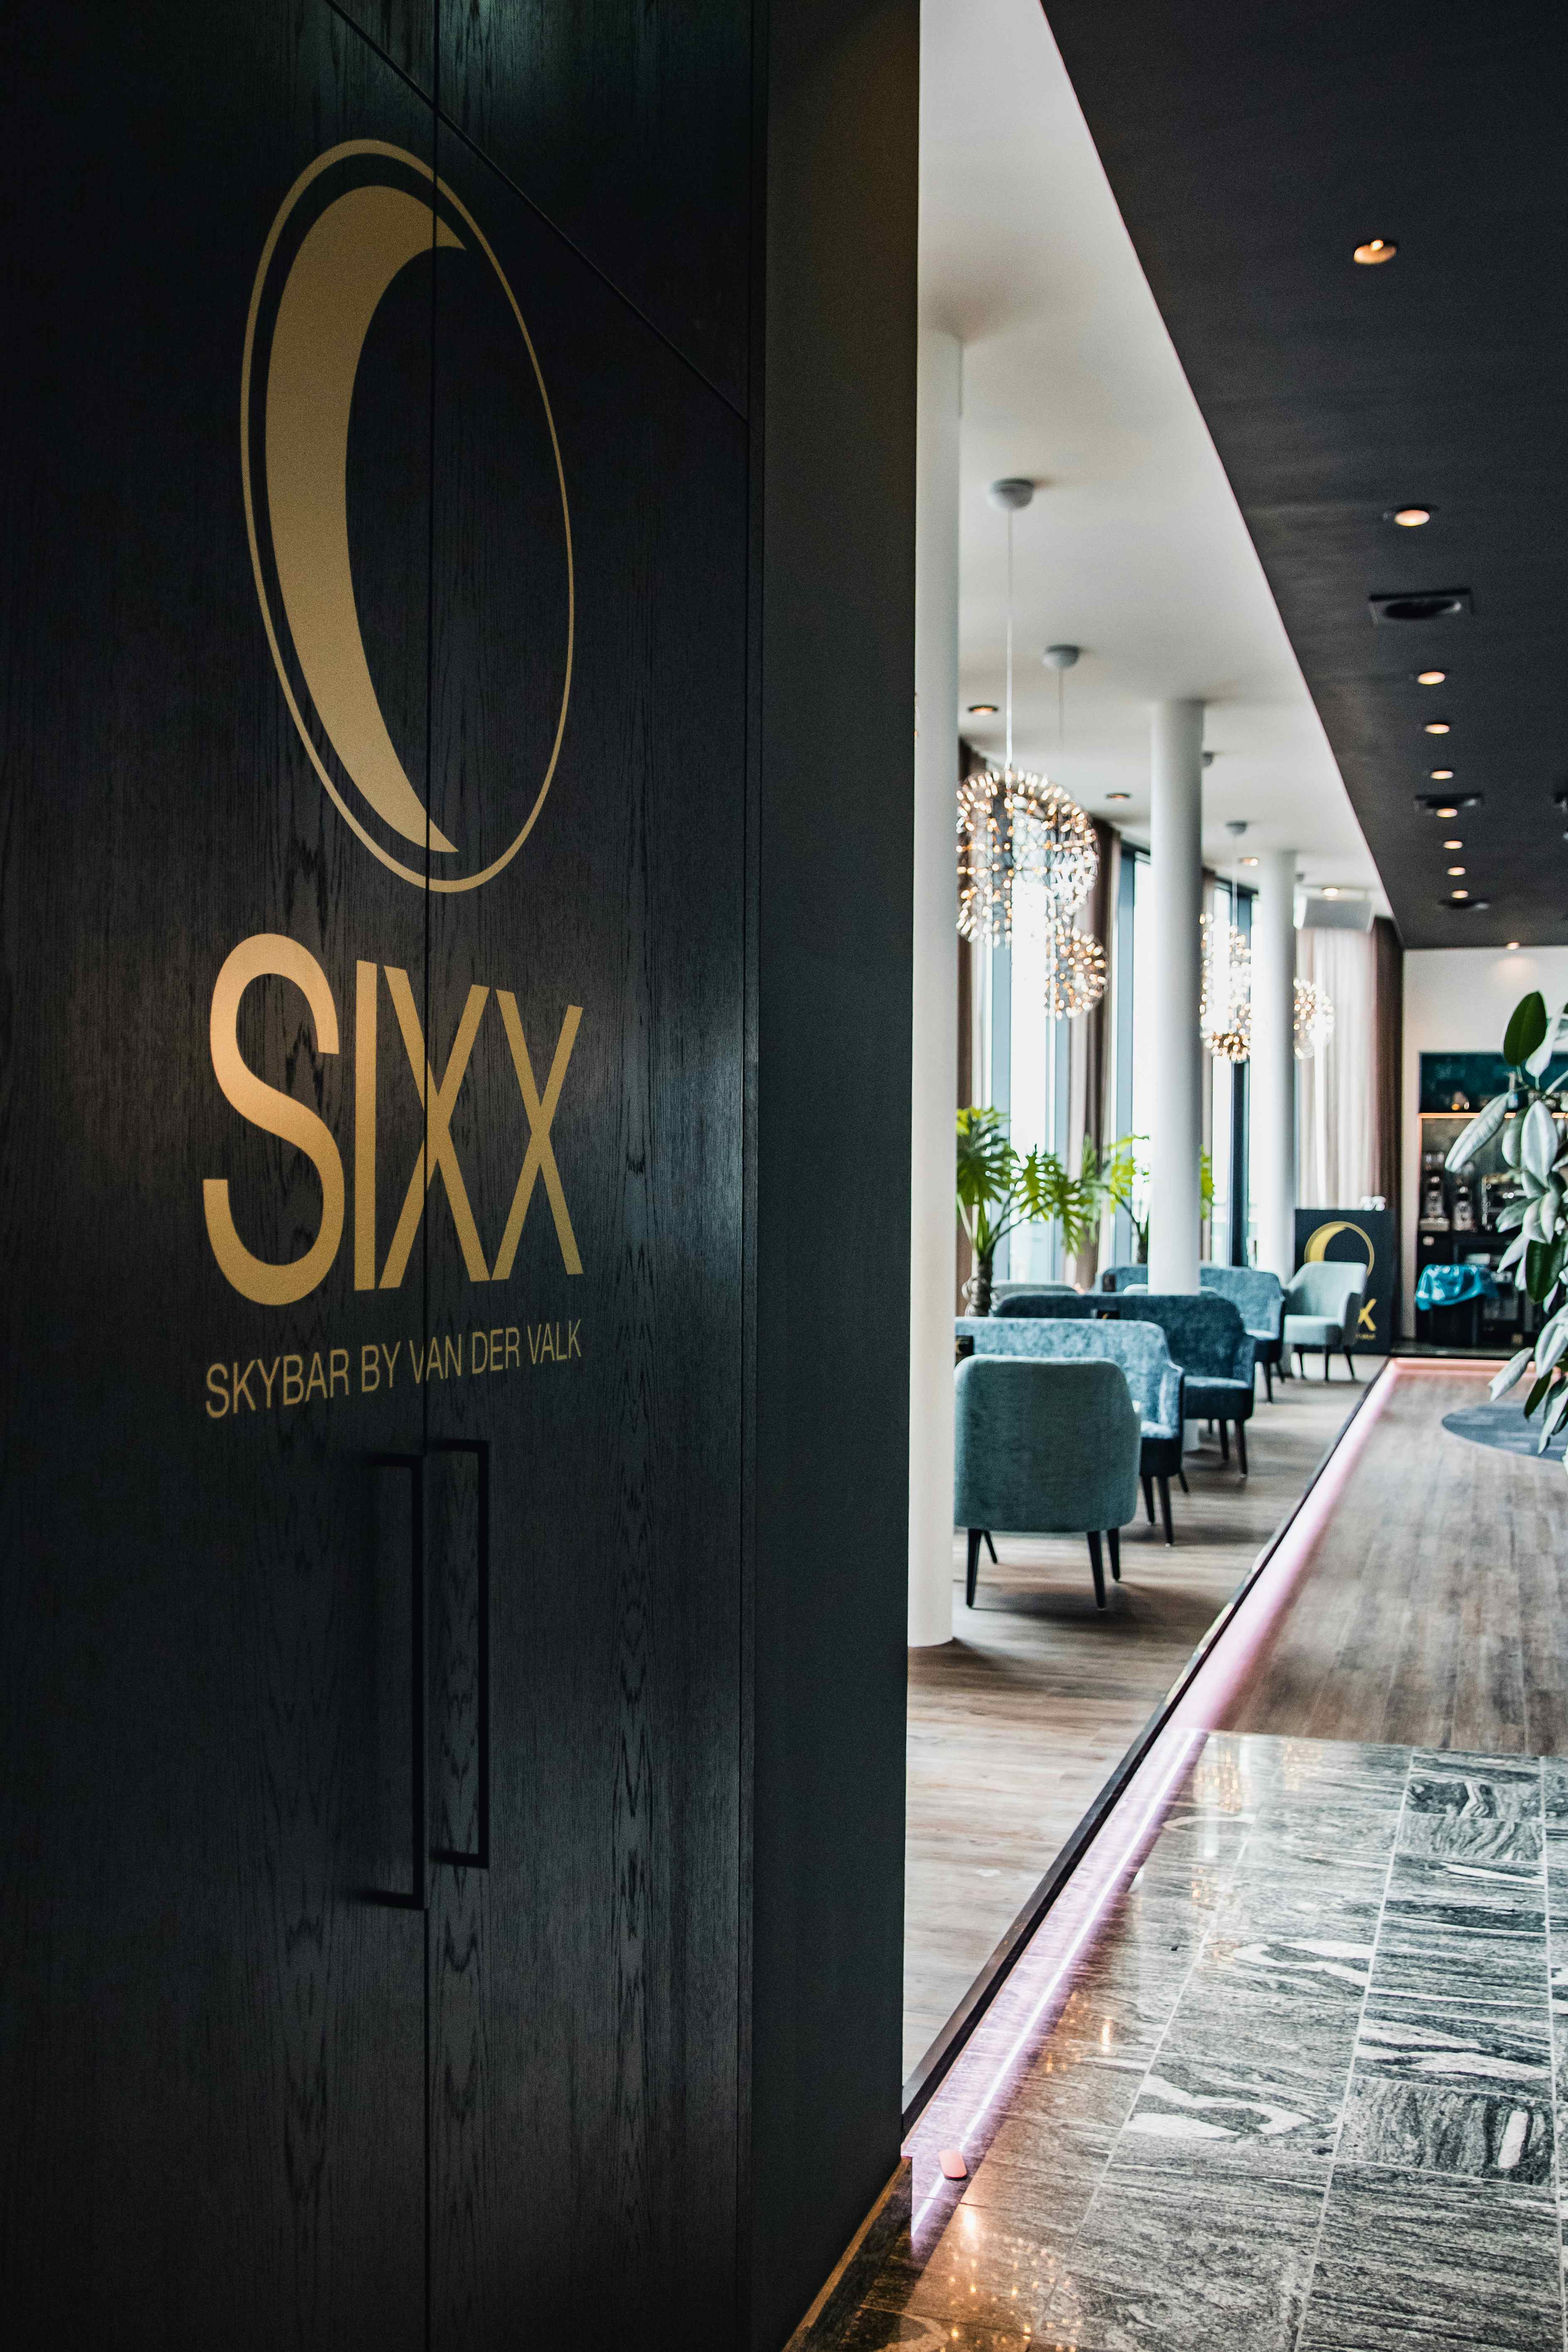 SIXX skybar, Van der Valk Hotel Amersfoort-A1